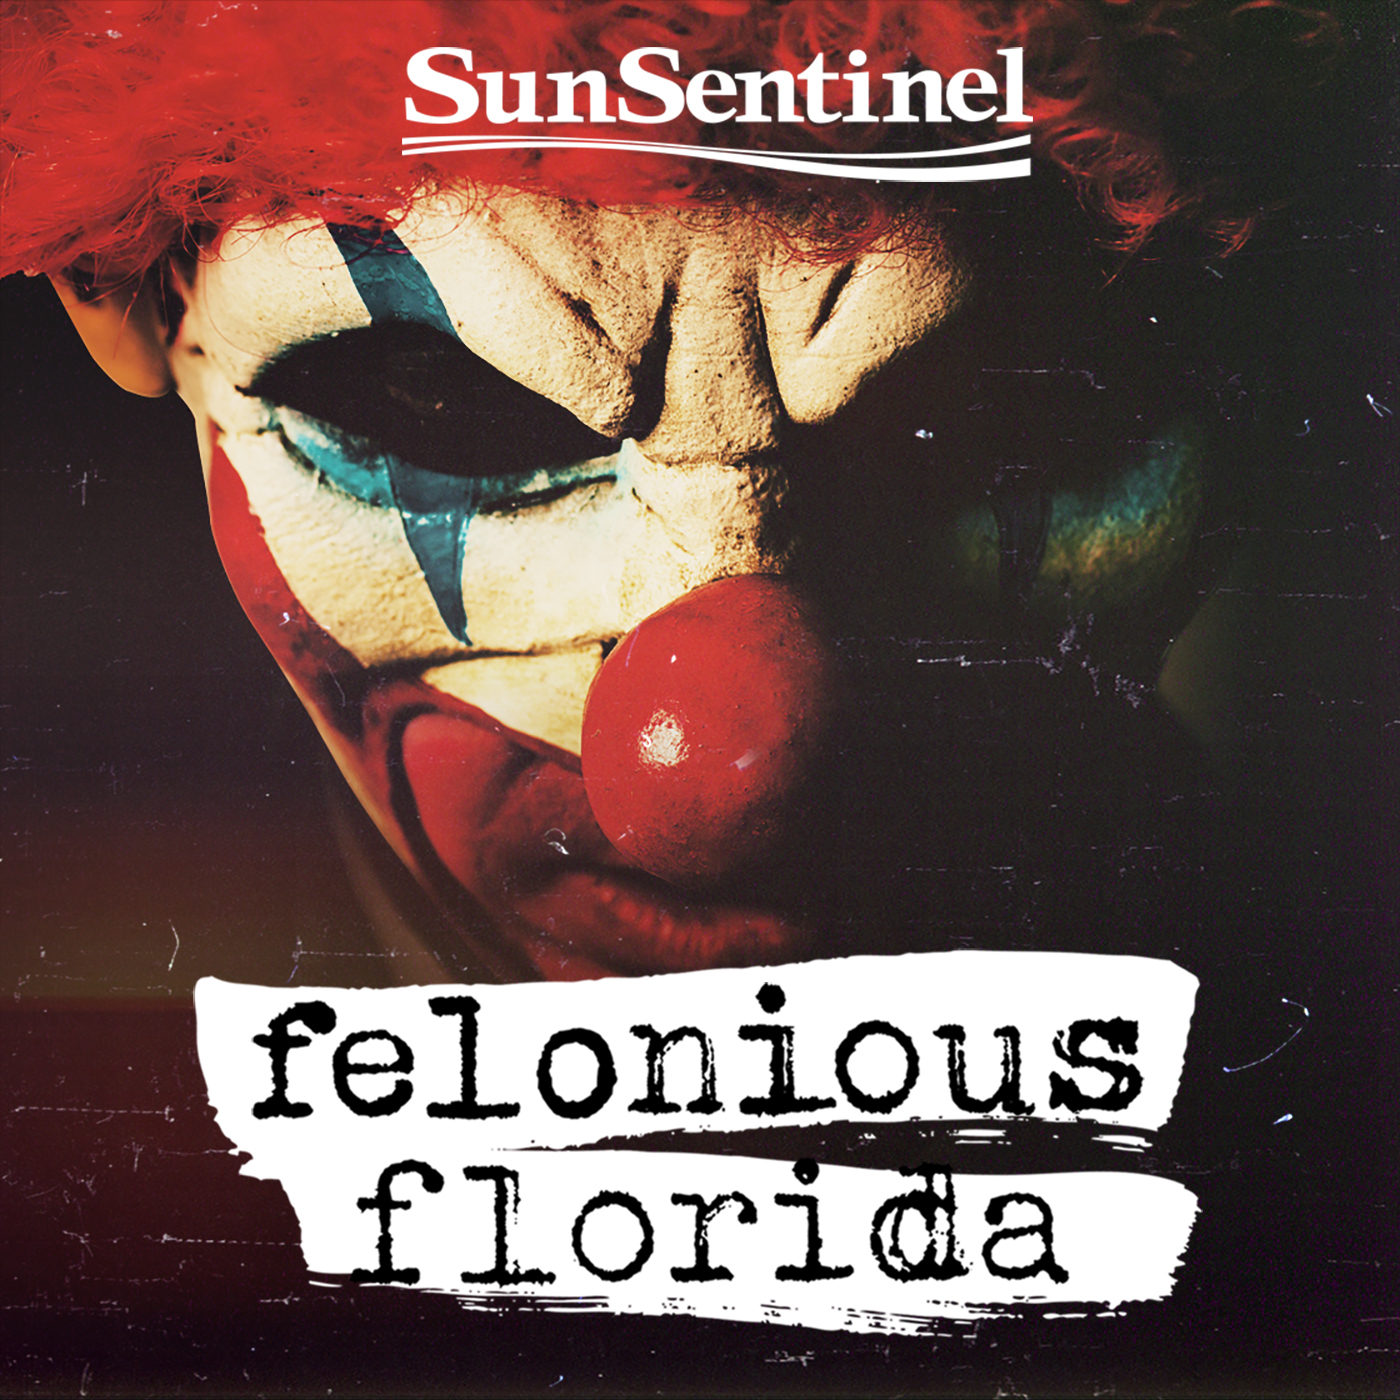 Introducing Felonious Florida, Season 2